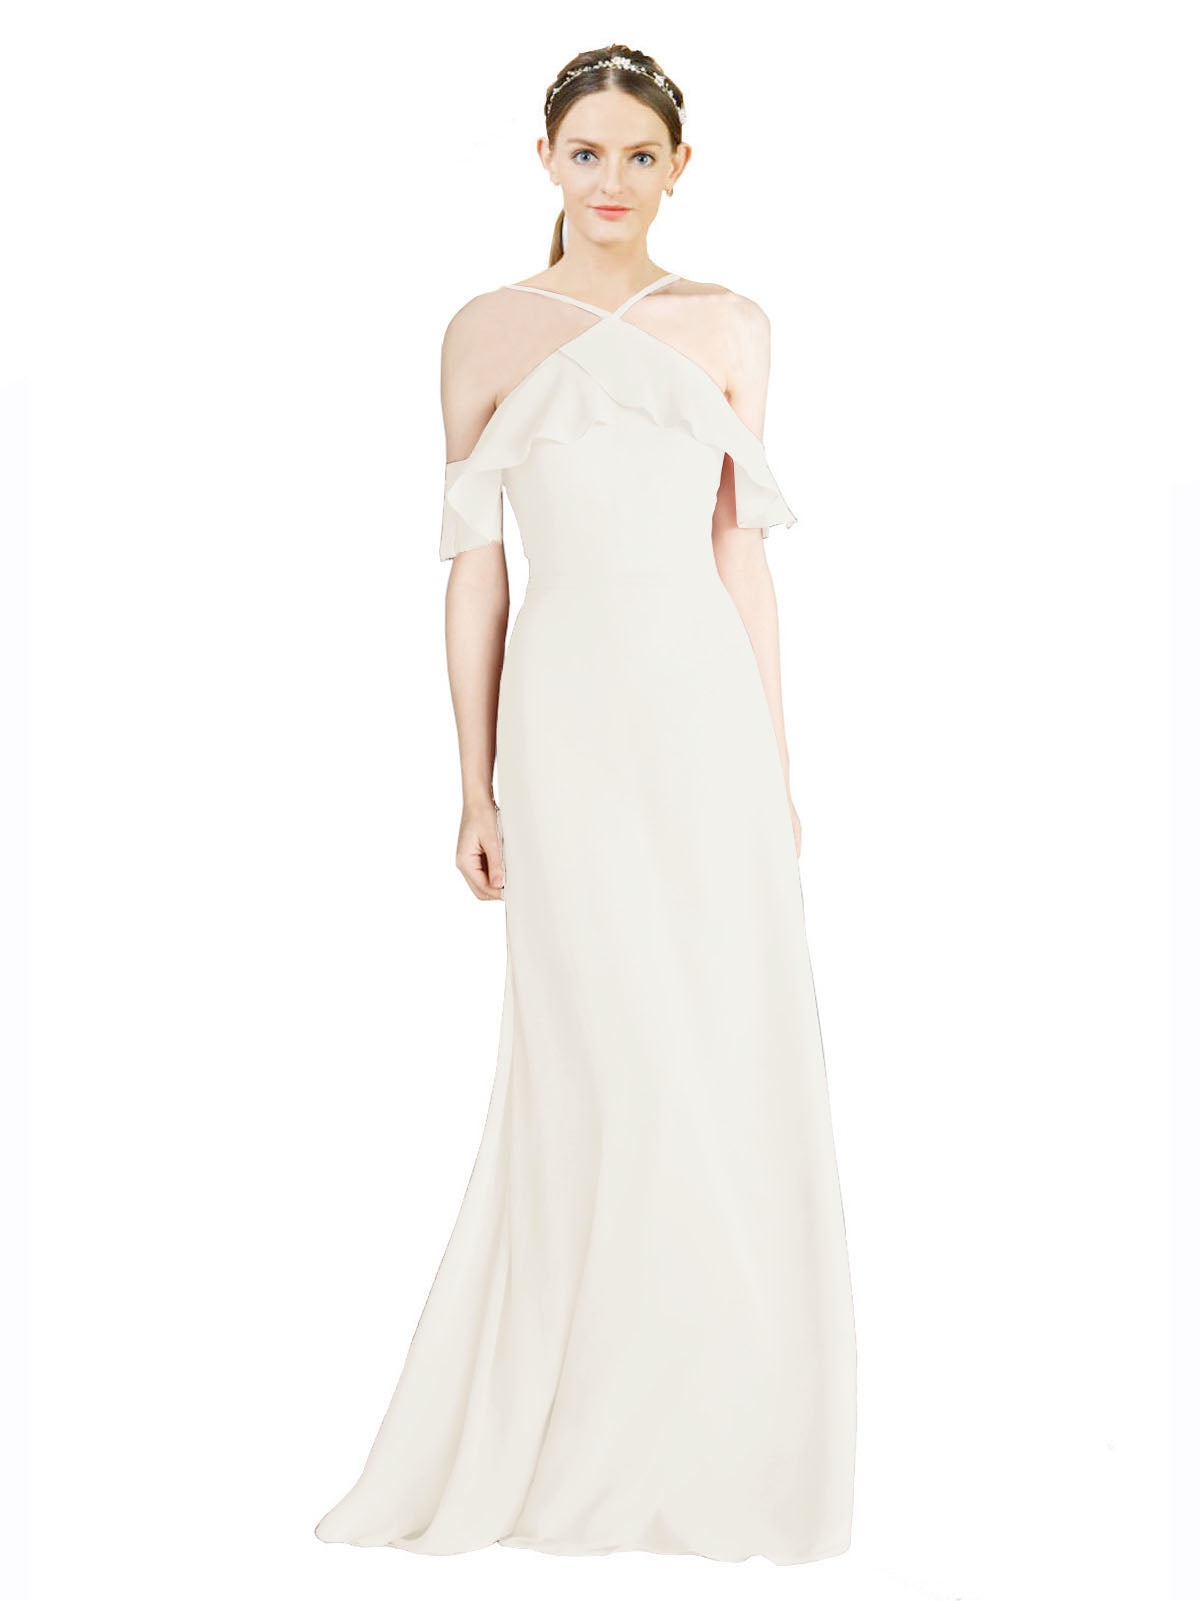 Ivory A-Line Halter Sleeveless Long Chiffon Bridesmaid Dress Rylan